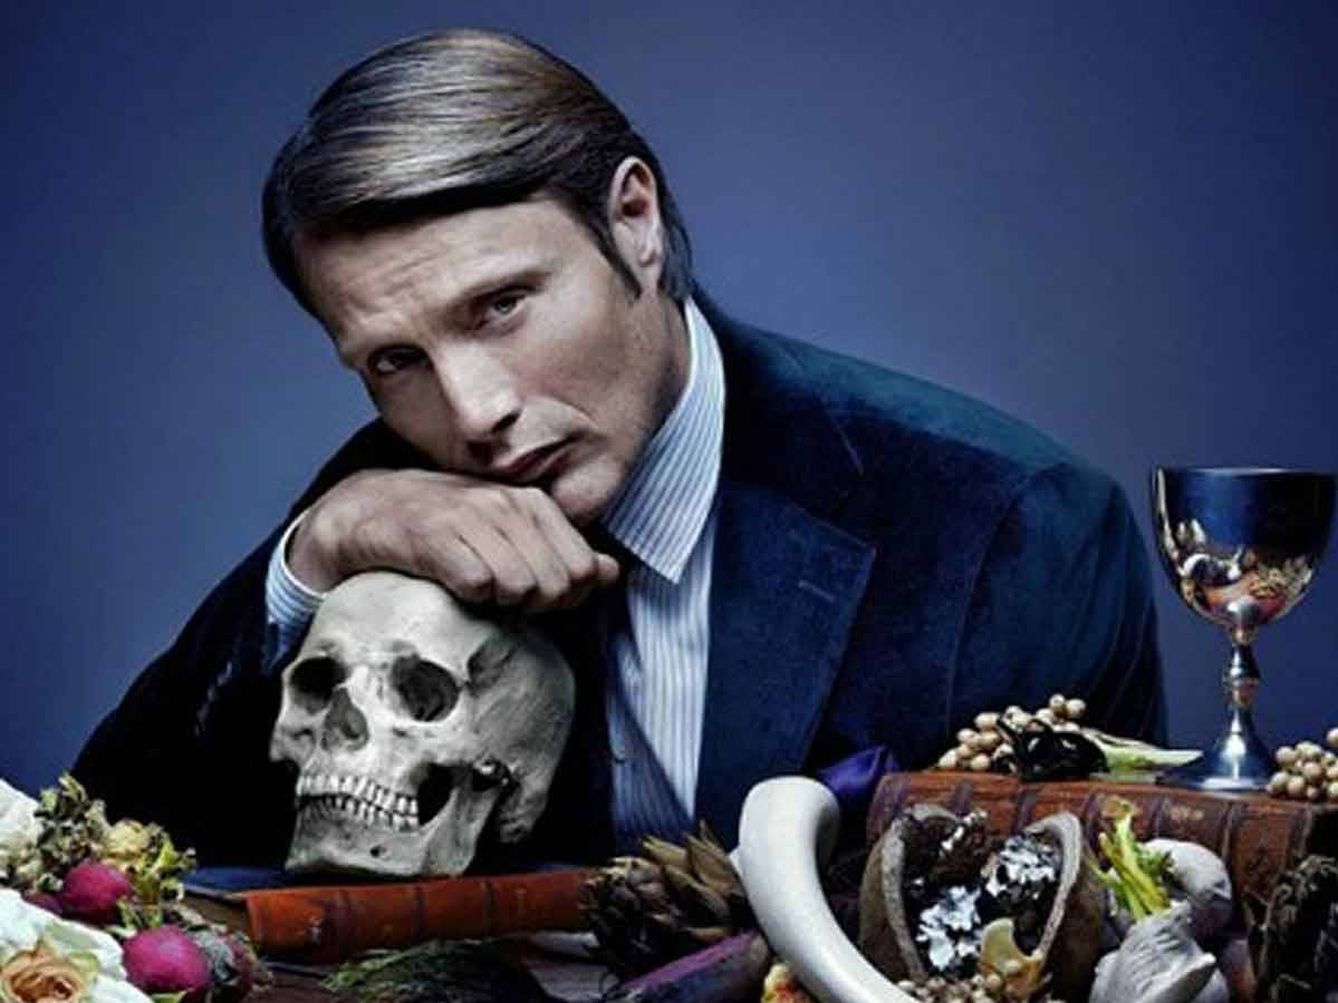 'Hannibal'. (NBC)